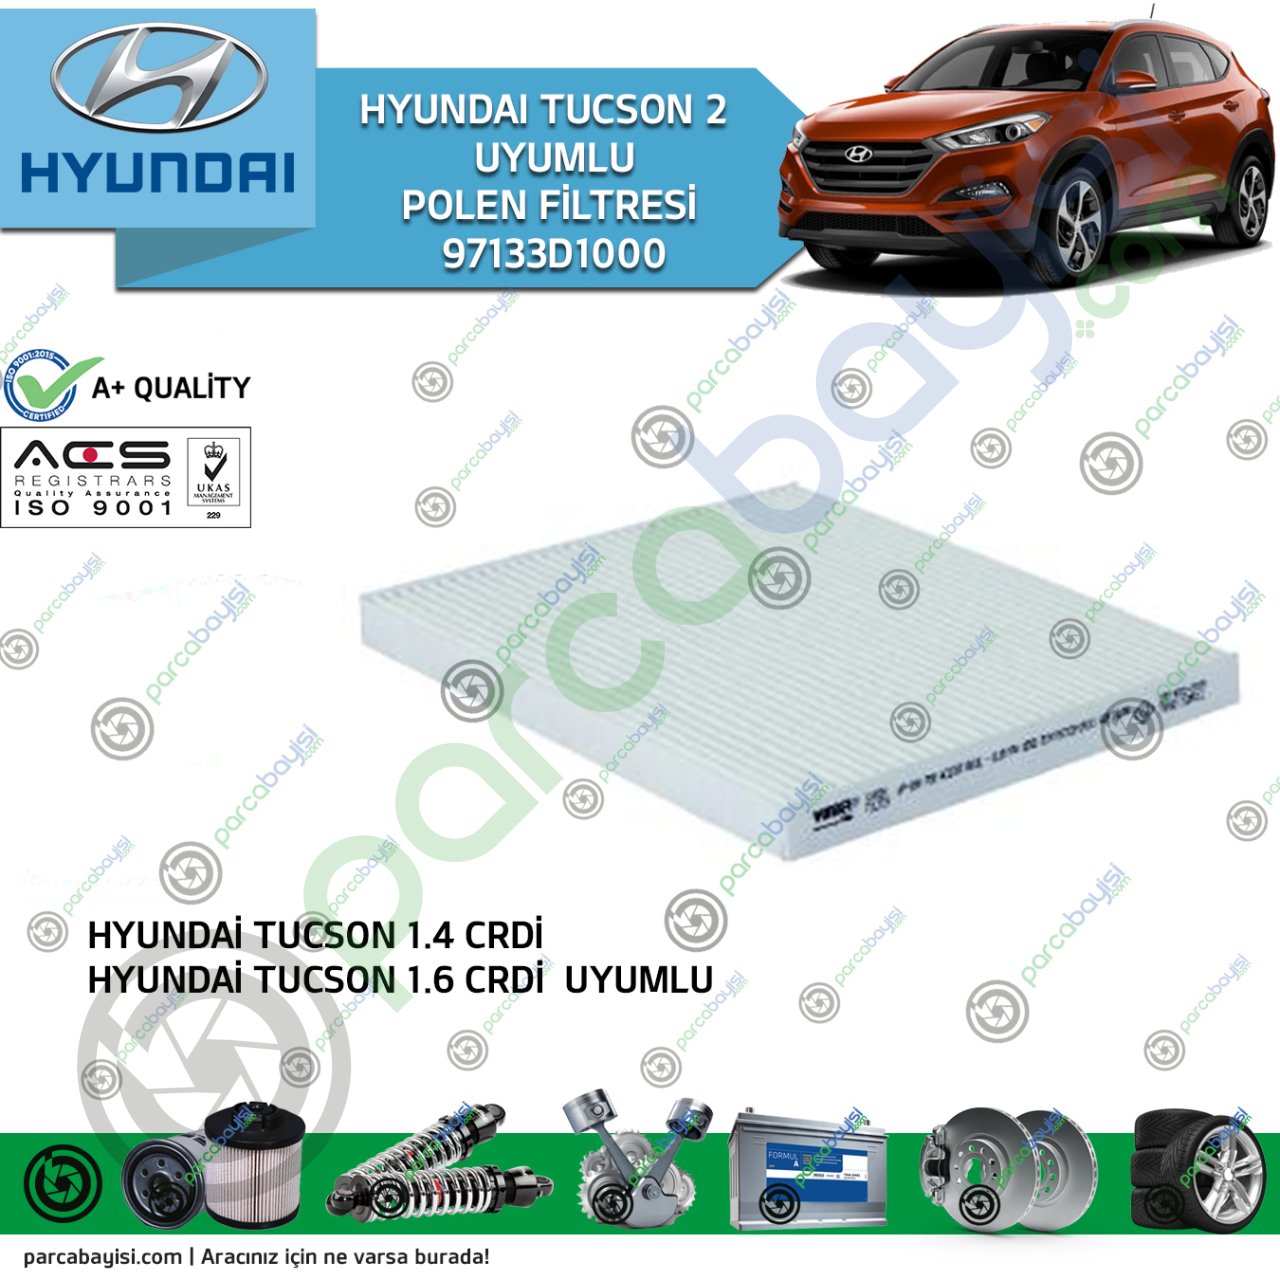 Hyundai Tucson 2 Polen Filtresi Muadil | 97133D1000